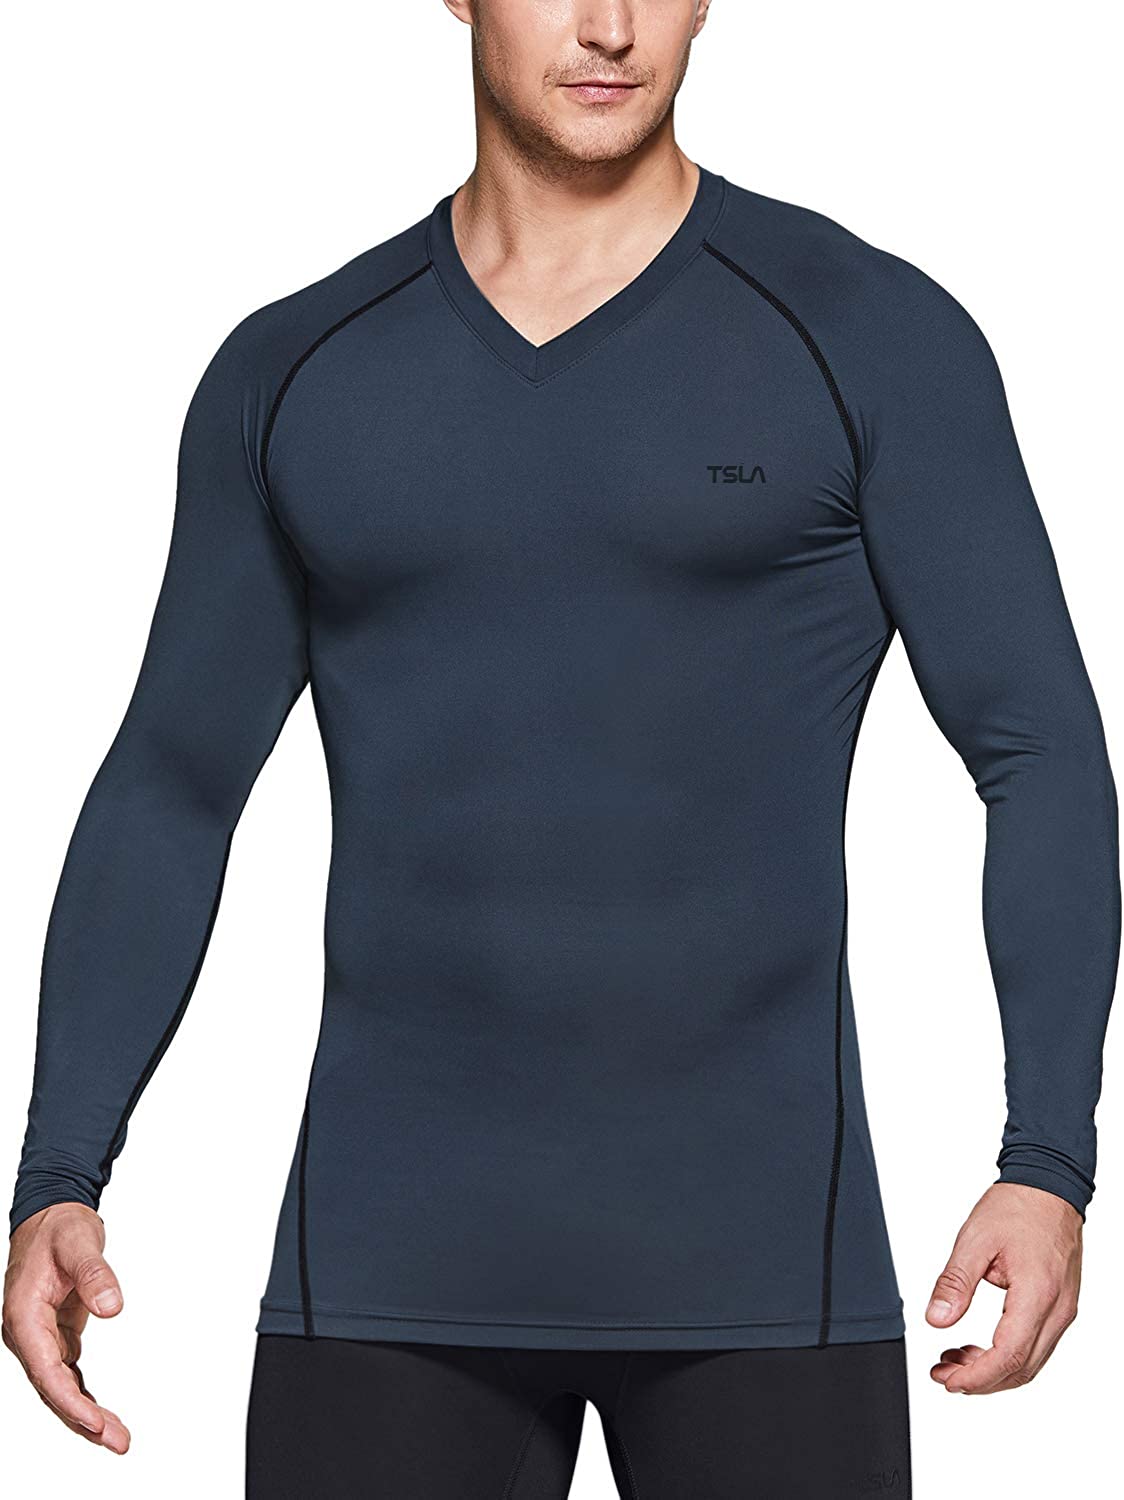 TSLA Mens Thermal Compression Shirt Long Sleeve Baselayer Long/Mock/V-Neck Top